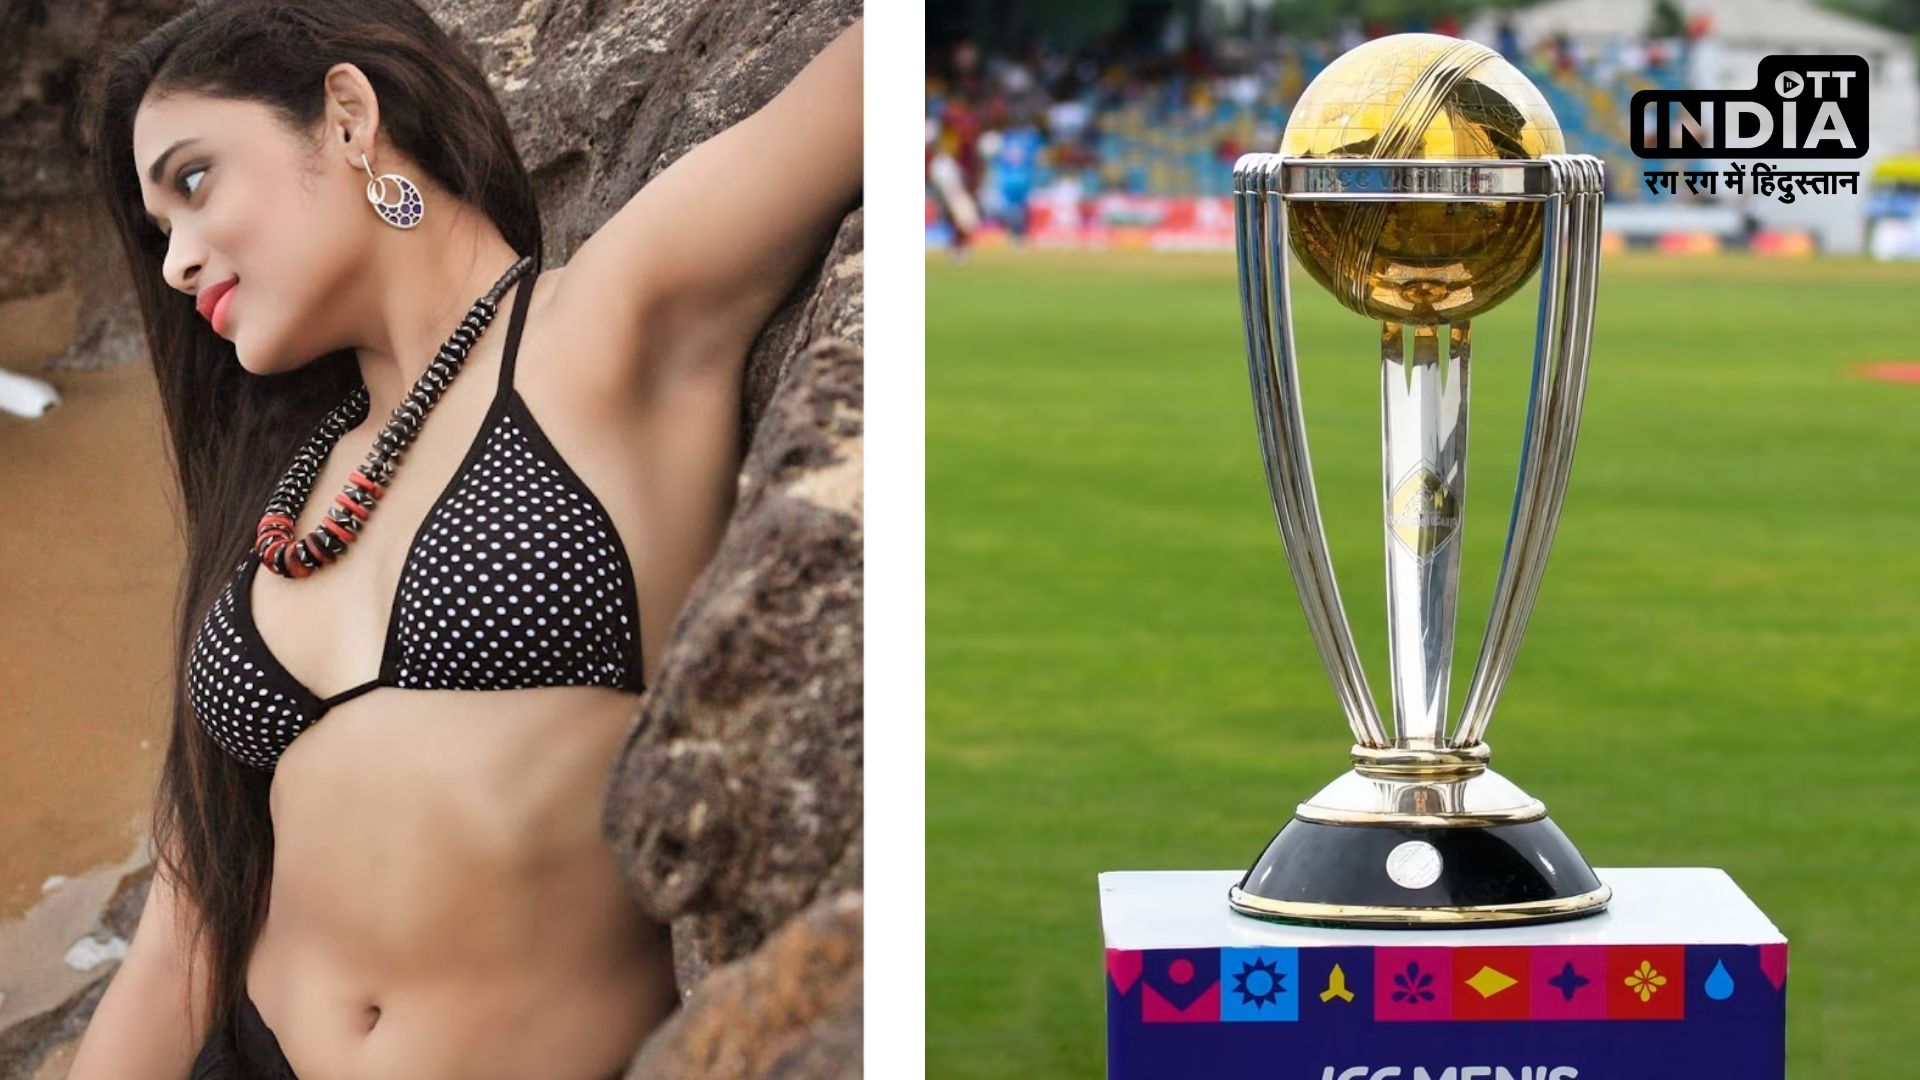 Rekha Bhoj Announced she will streak on vizag beach if India wins ICC World Cup Final